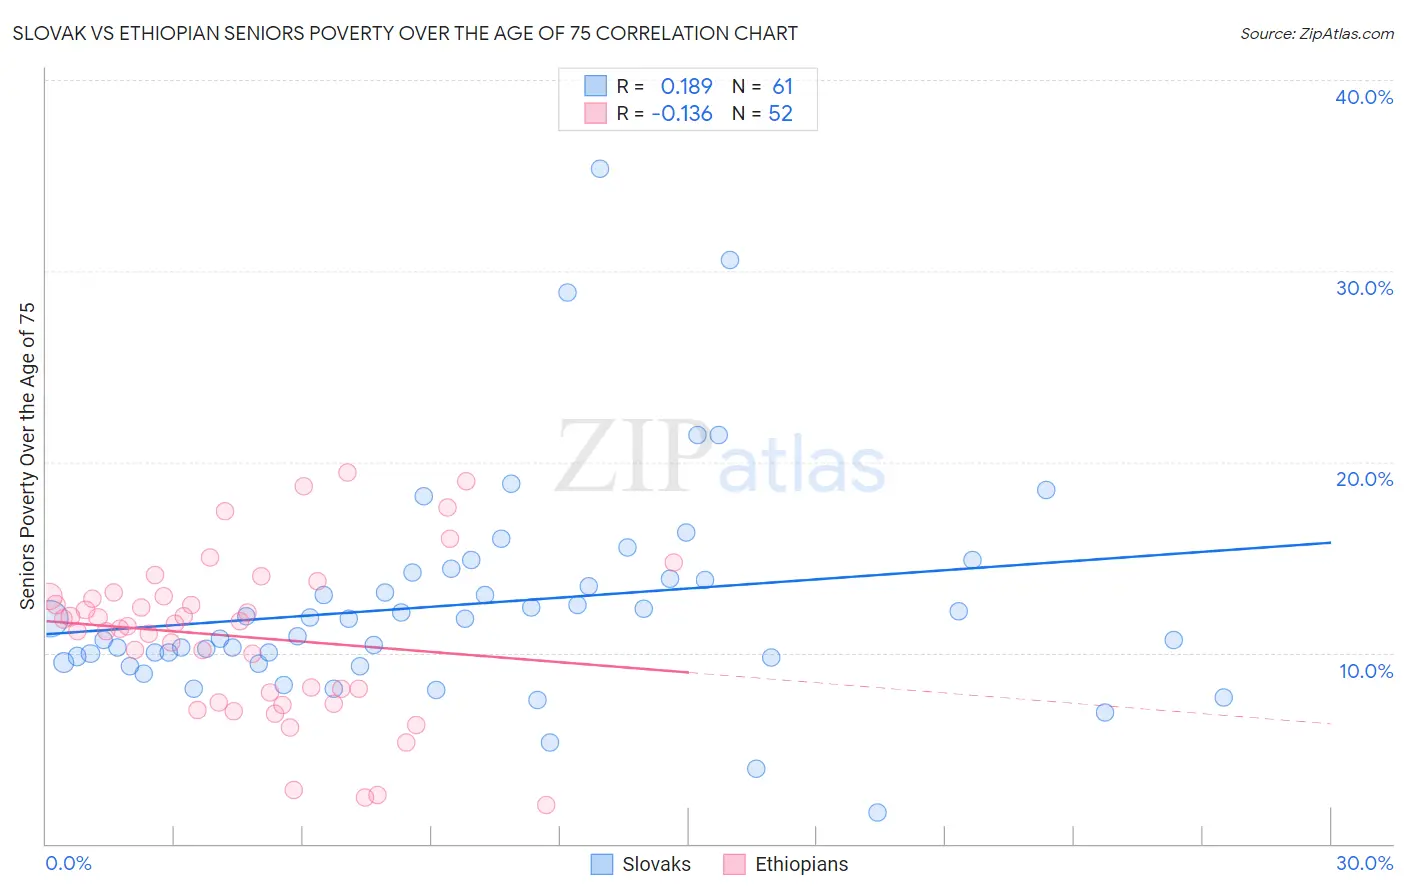 Slovak vs Ethiopian Seniors Poverty Over the Age of 75